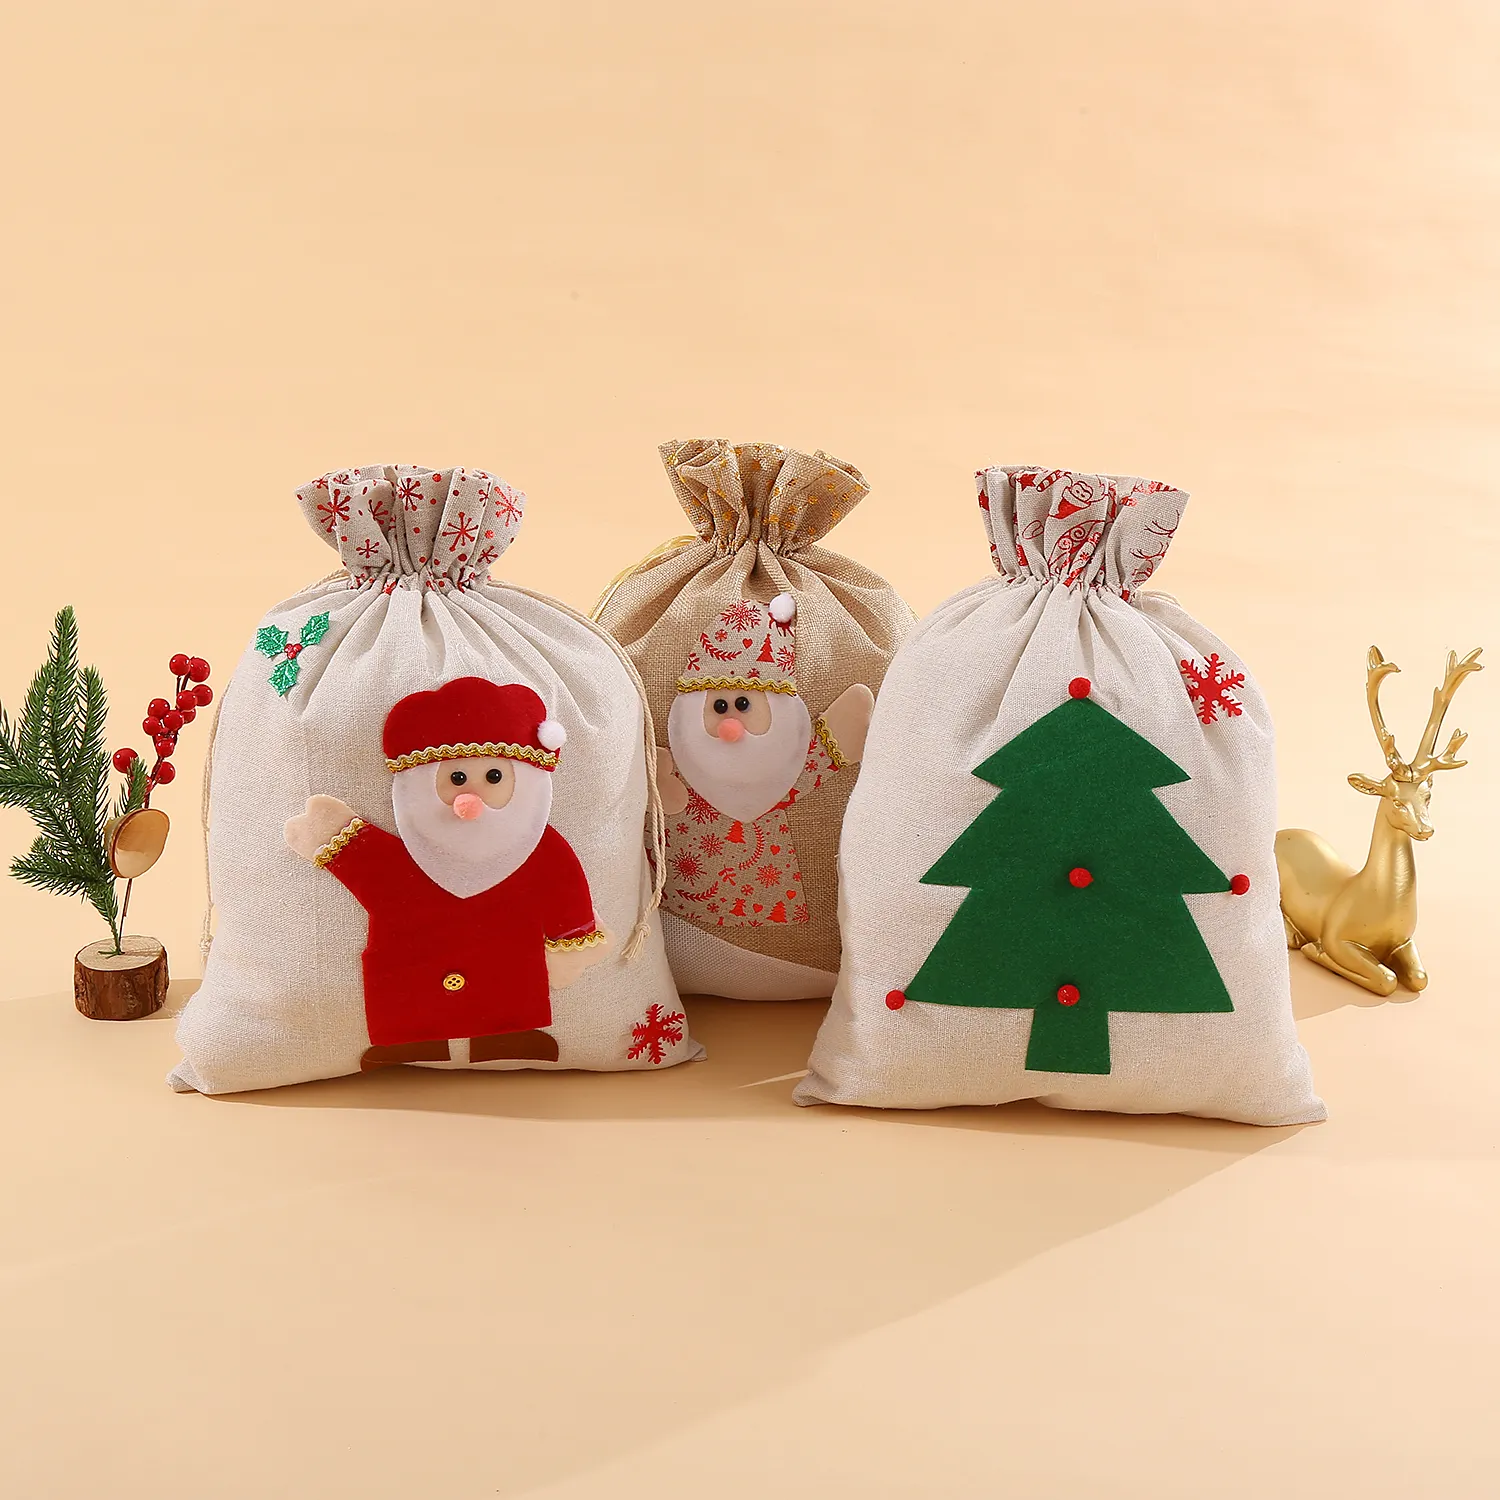 Bolsas navideñas grandes de 30x40 CM, empalme de saco de algodón de Navidad con cuerdas para envolver bolsa de regalo, Papá Noel